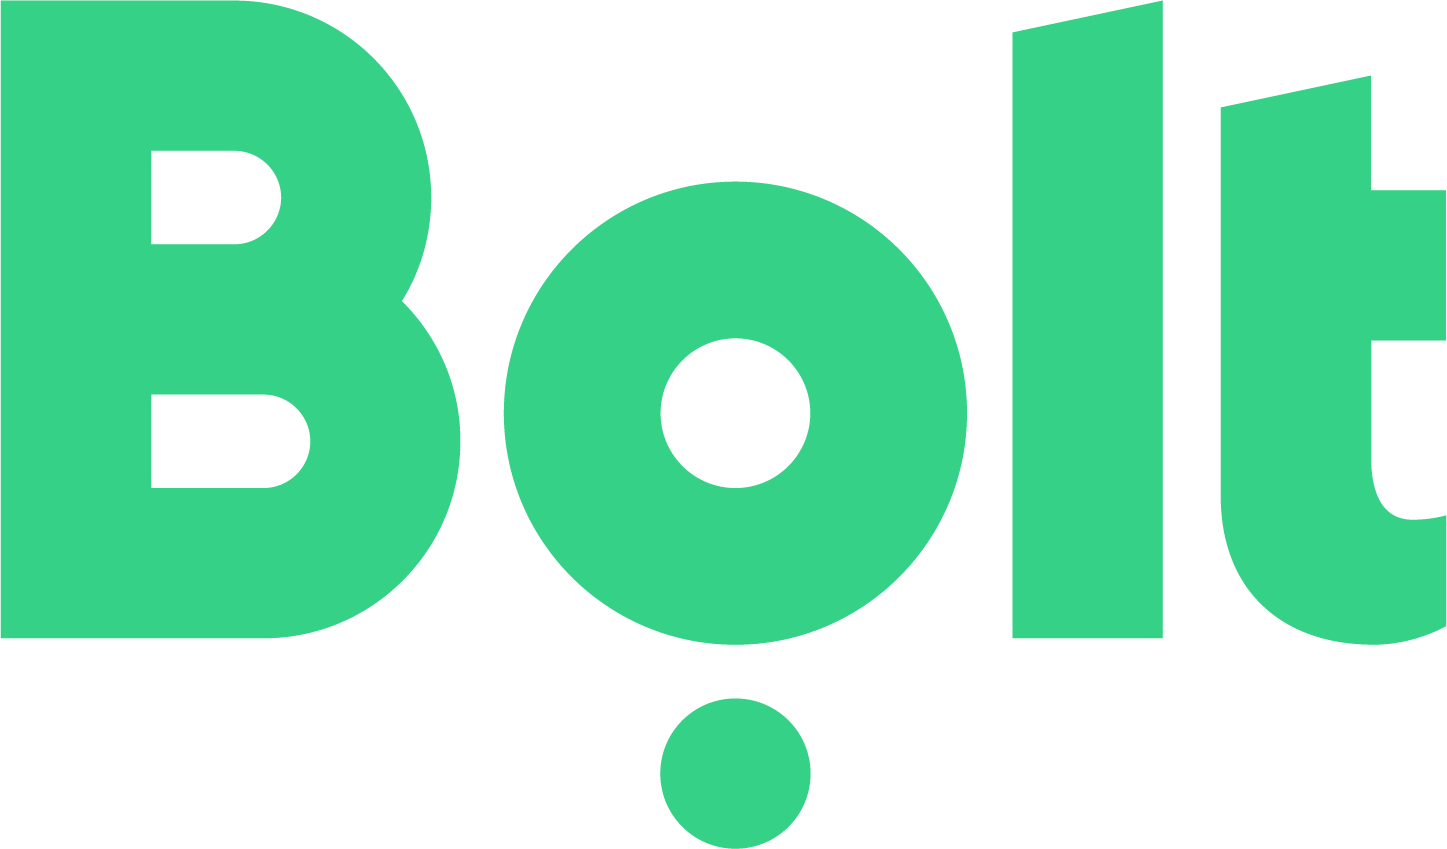 Logo Bolt